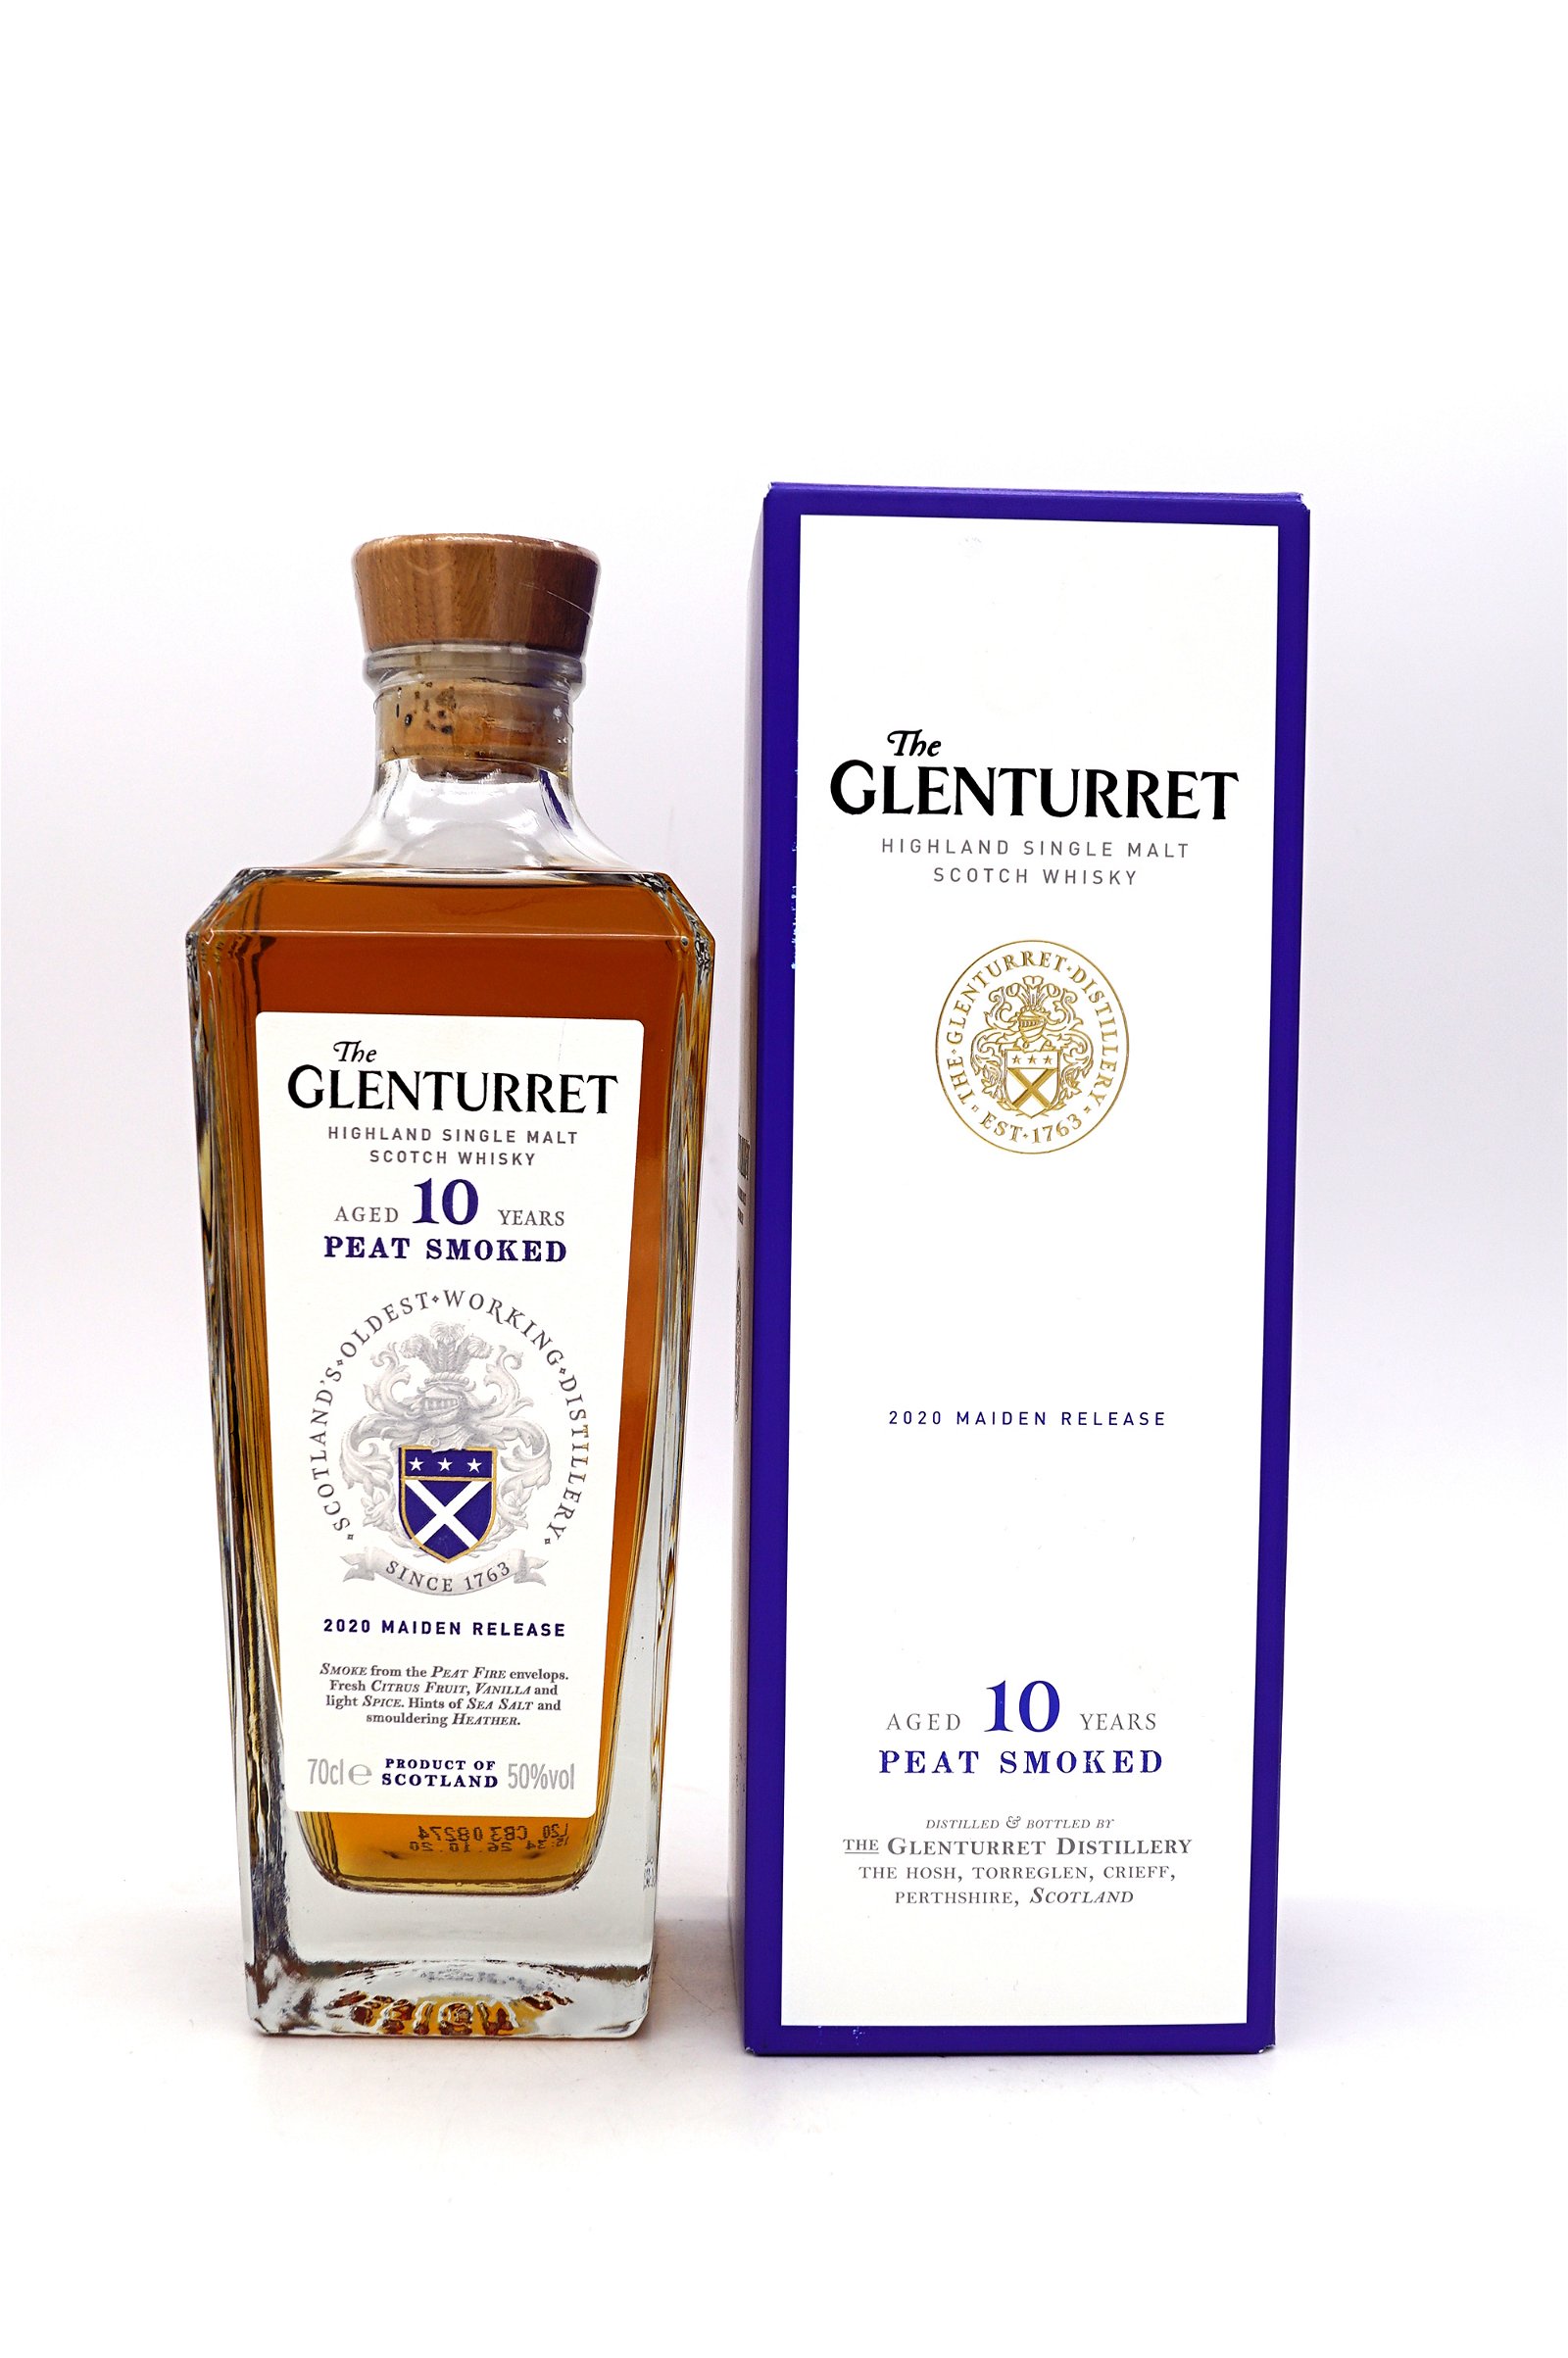 The Glenturret 10 Jahre Peat Smoked 2020 Maiden Release Highland Single Malt Scotch Whisky